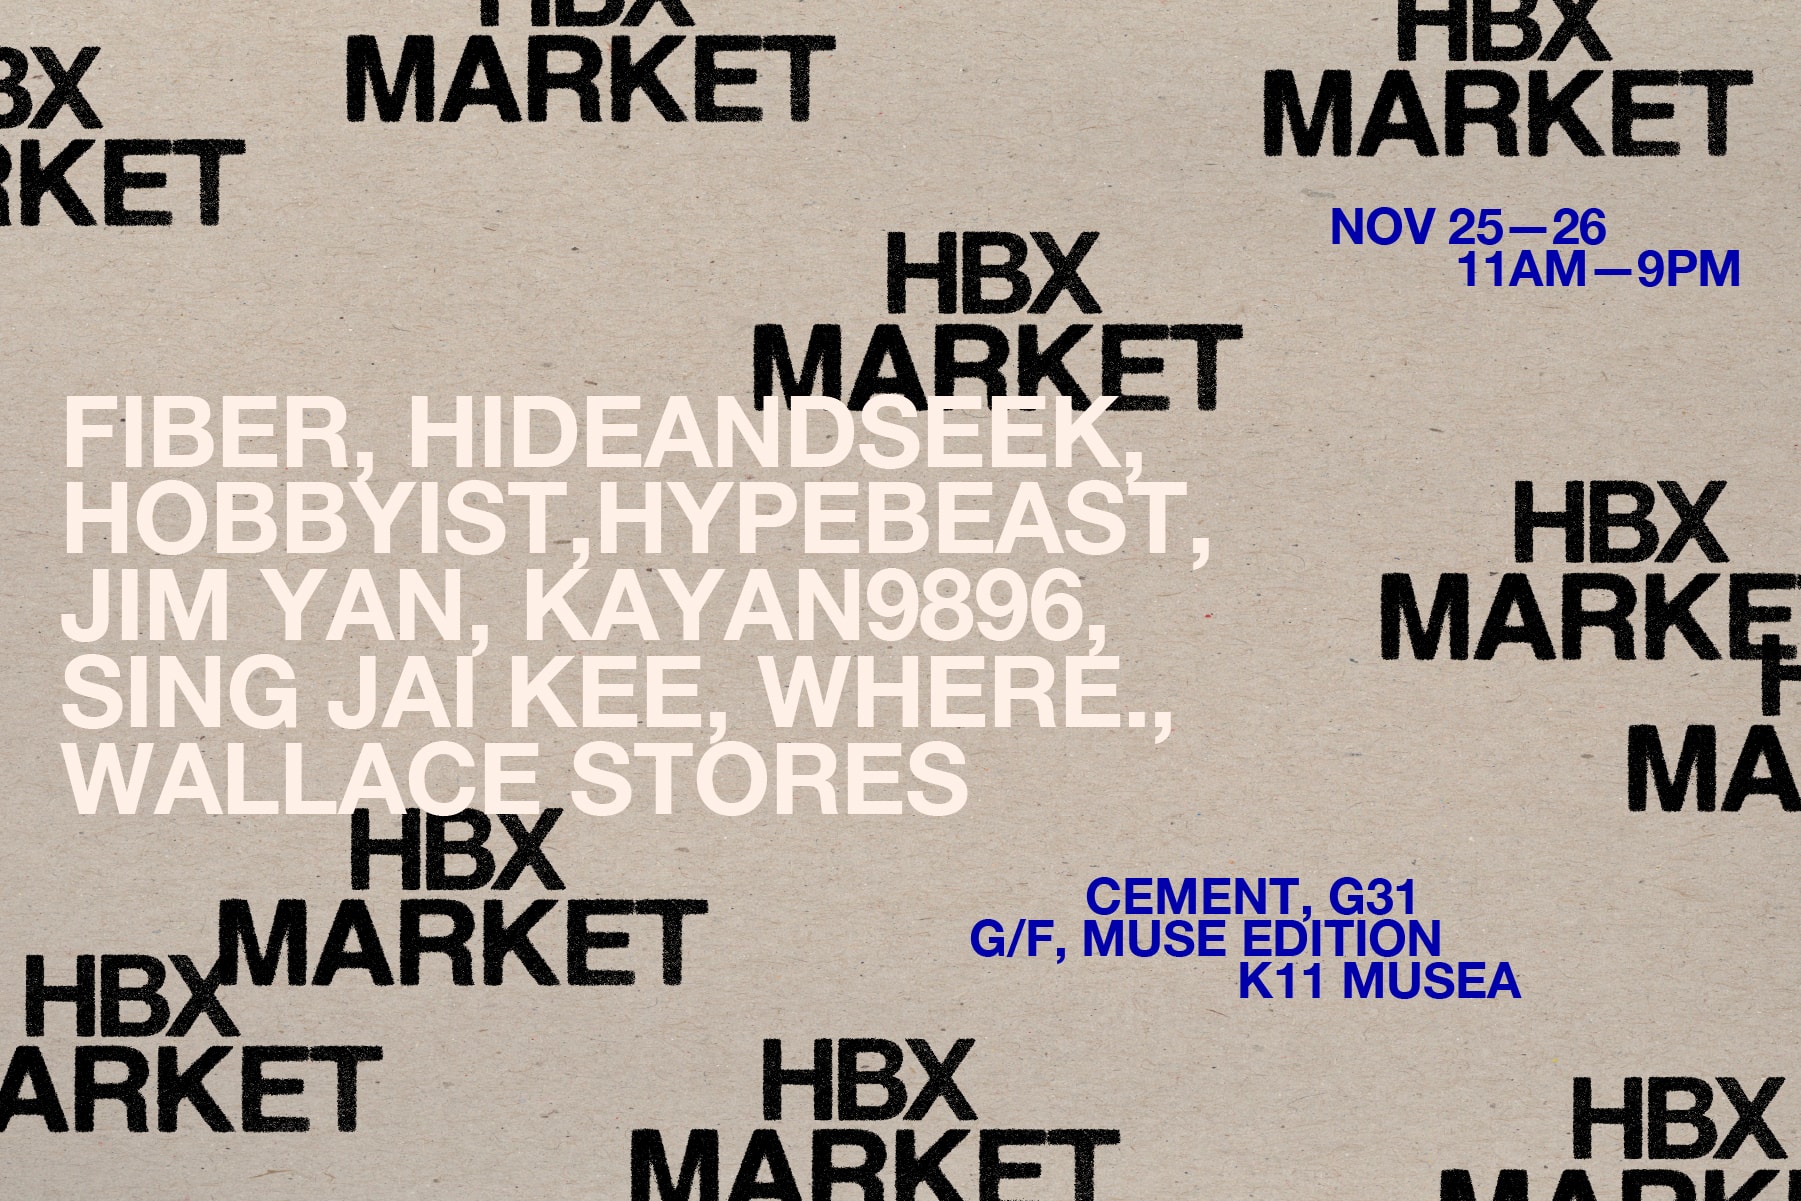 HBX 最新企劃 HBX Market 期間限定店即將登場